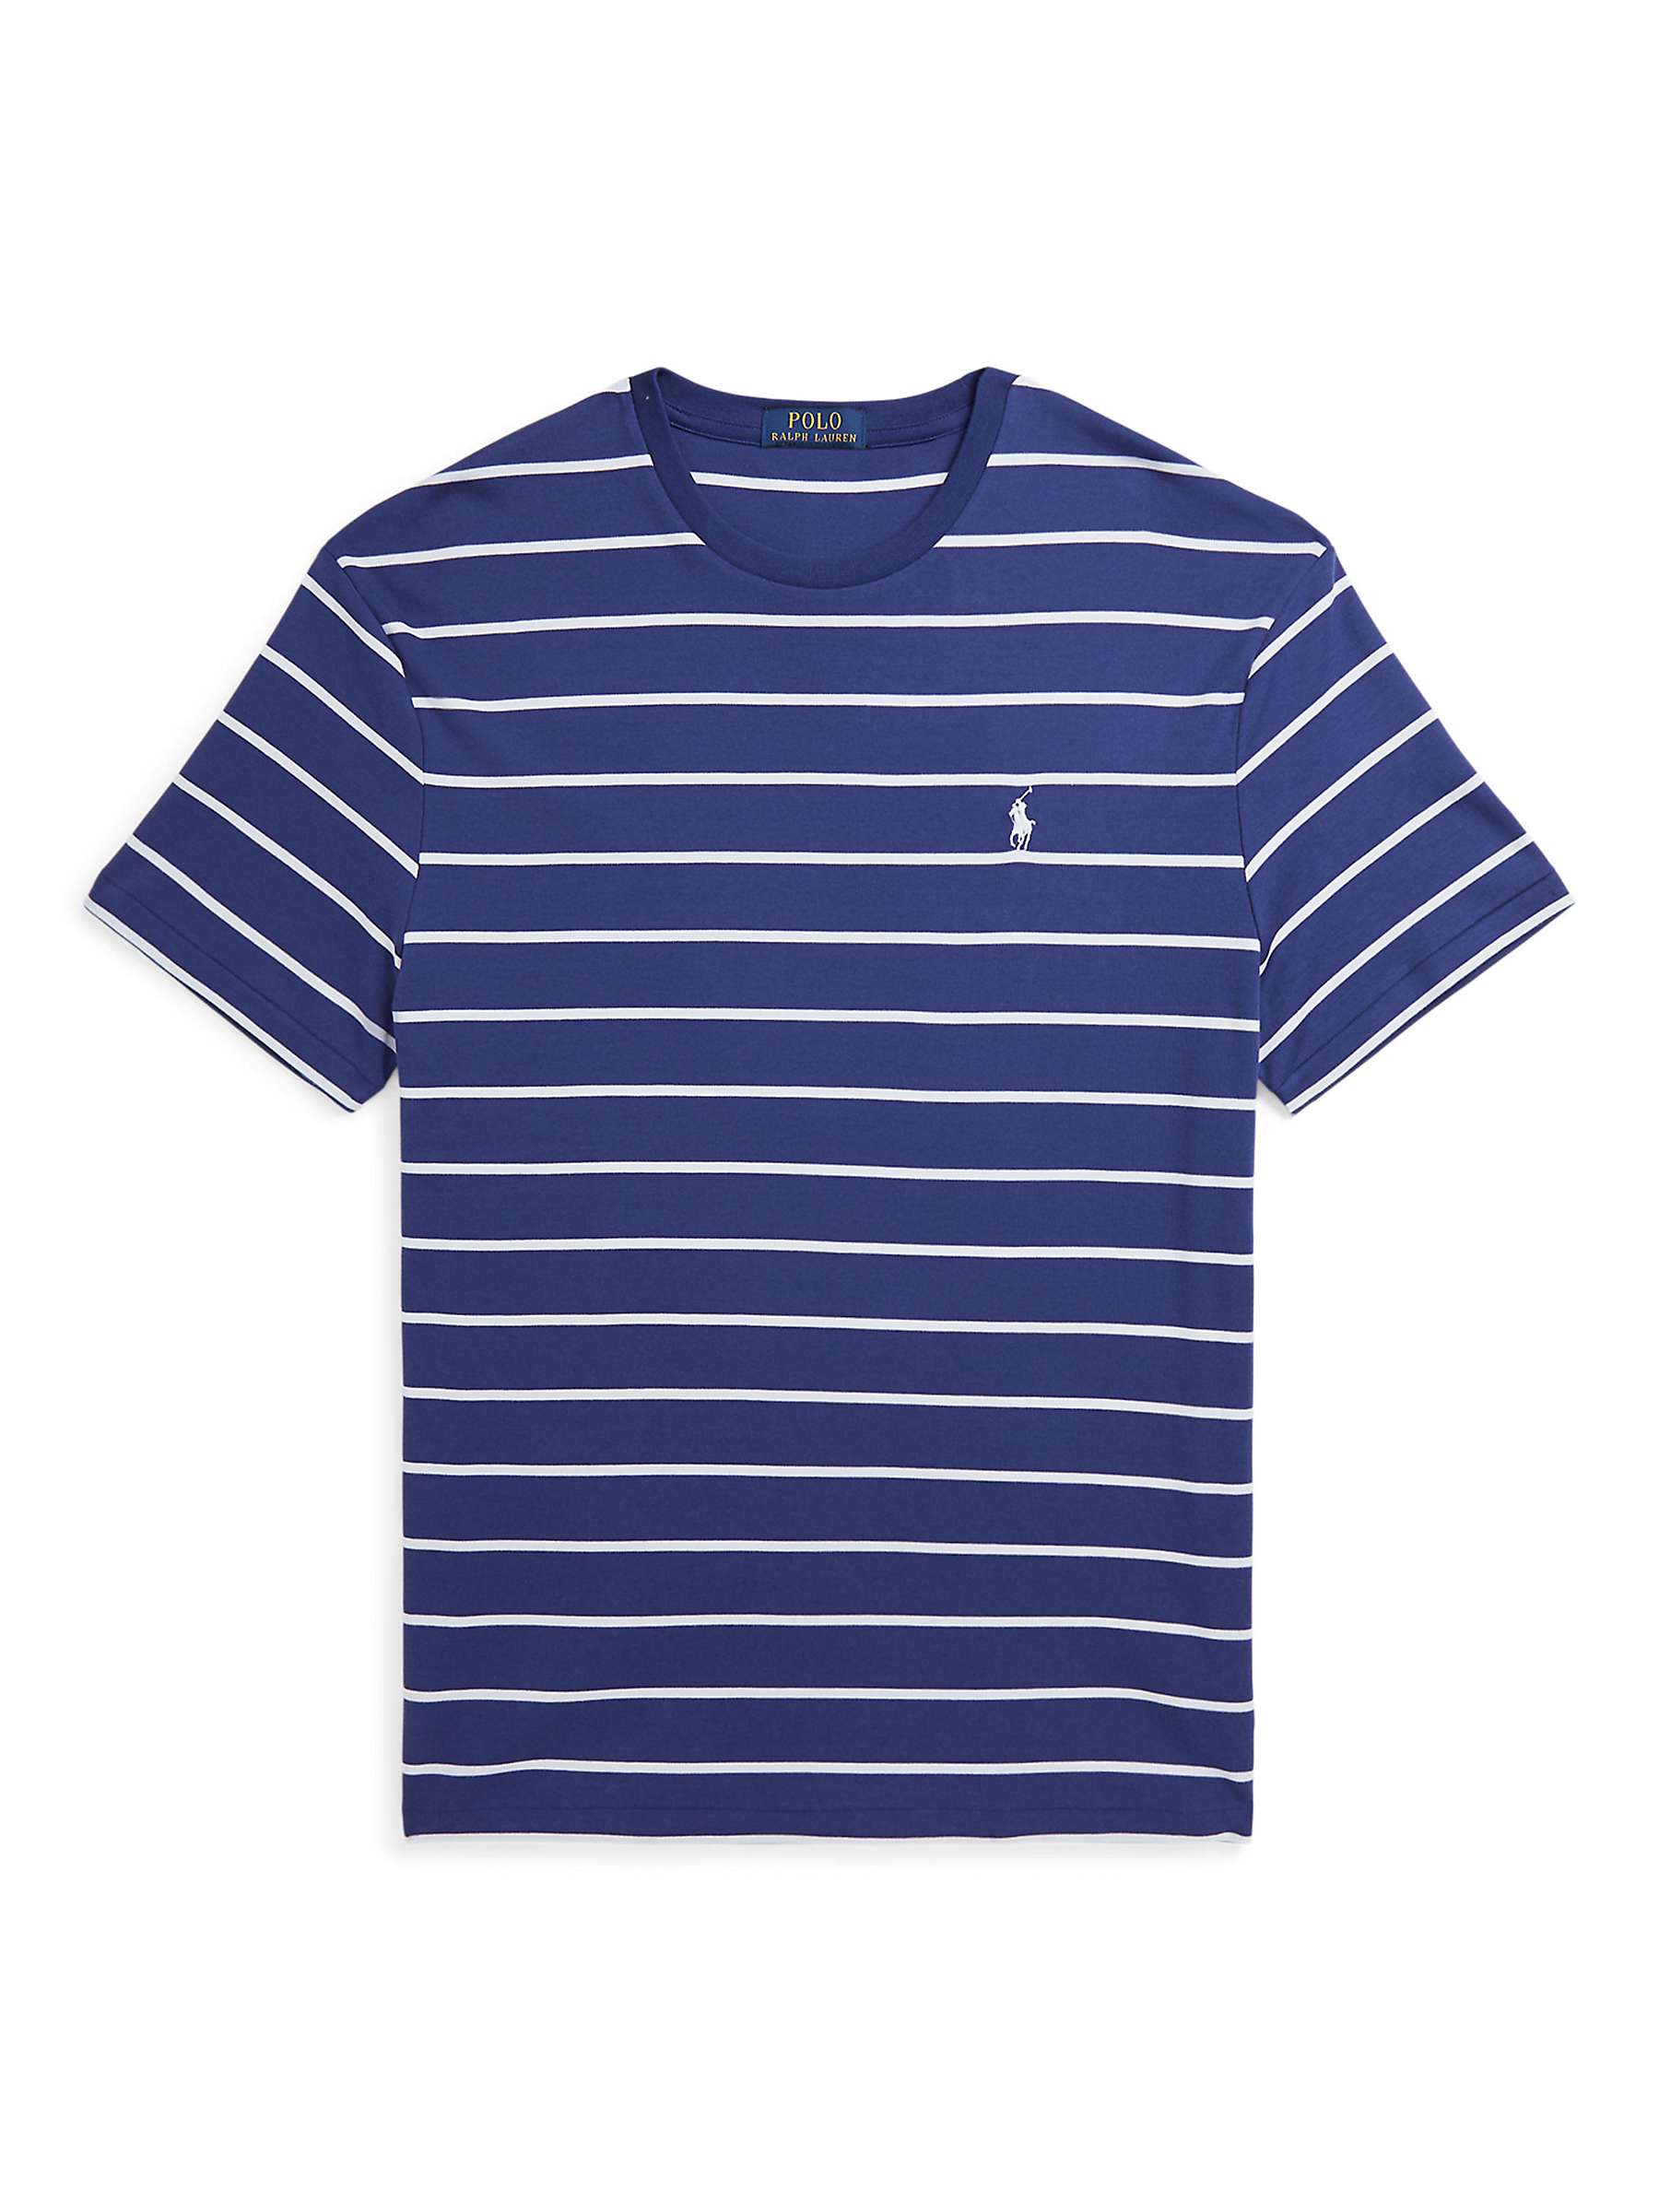 Buy Polo Ralph Lauren Striped Cotton T-shirt, Fall Royal/White Online at johnlewis.com